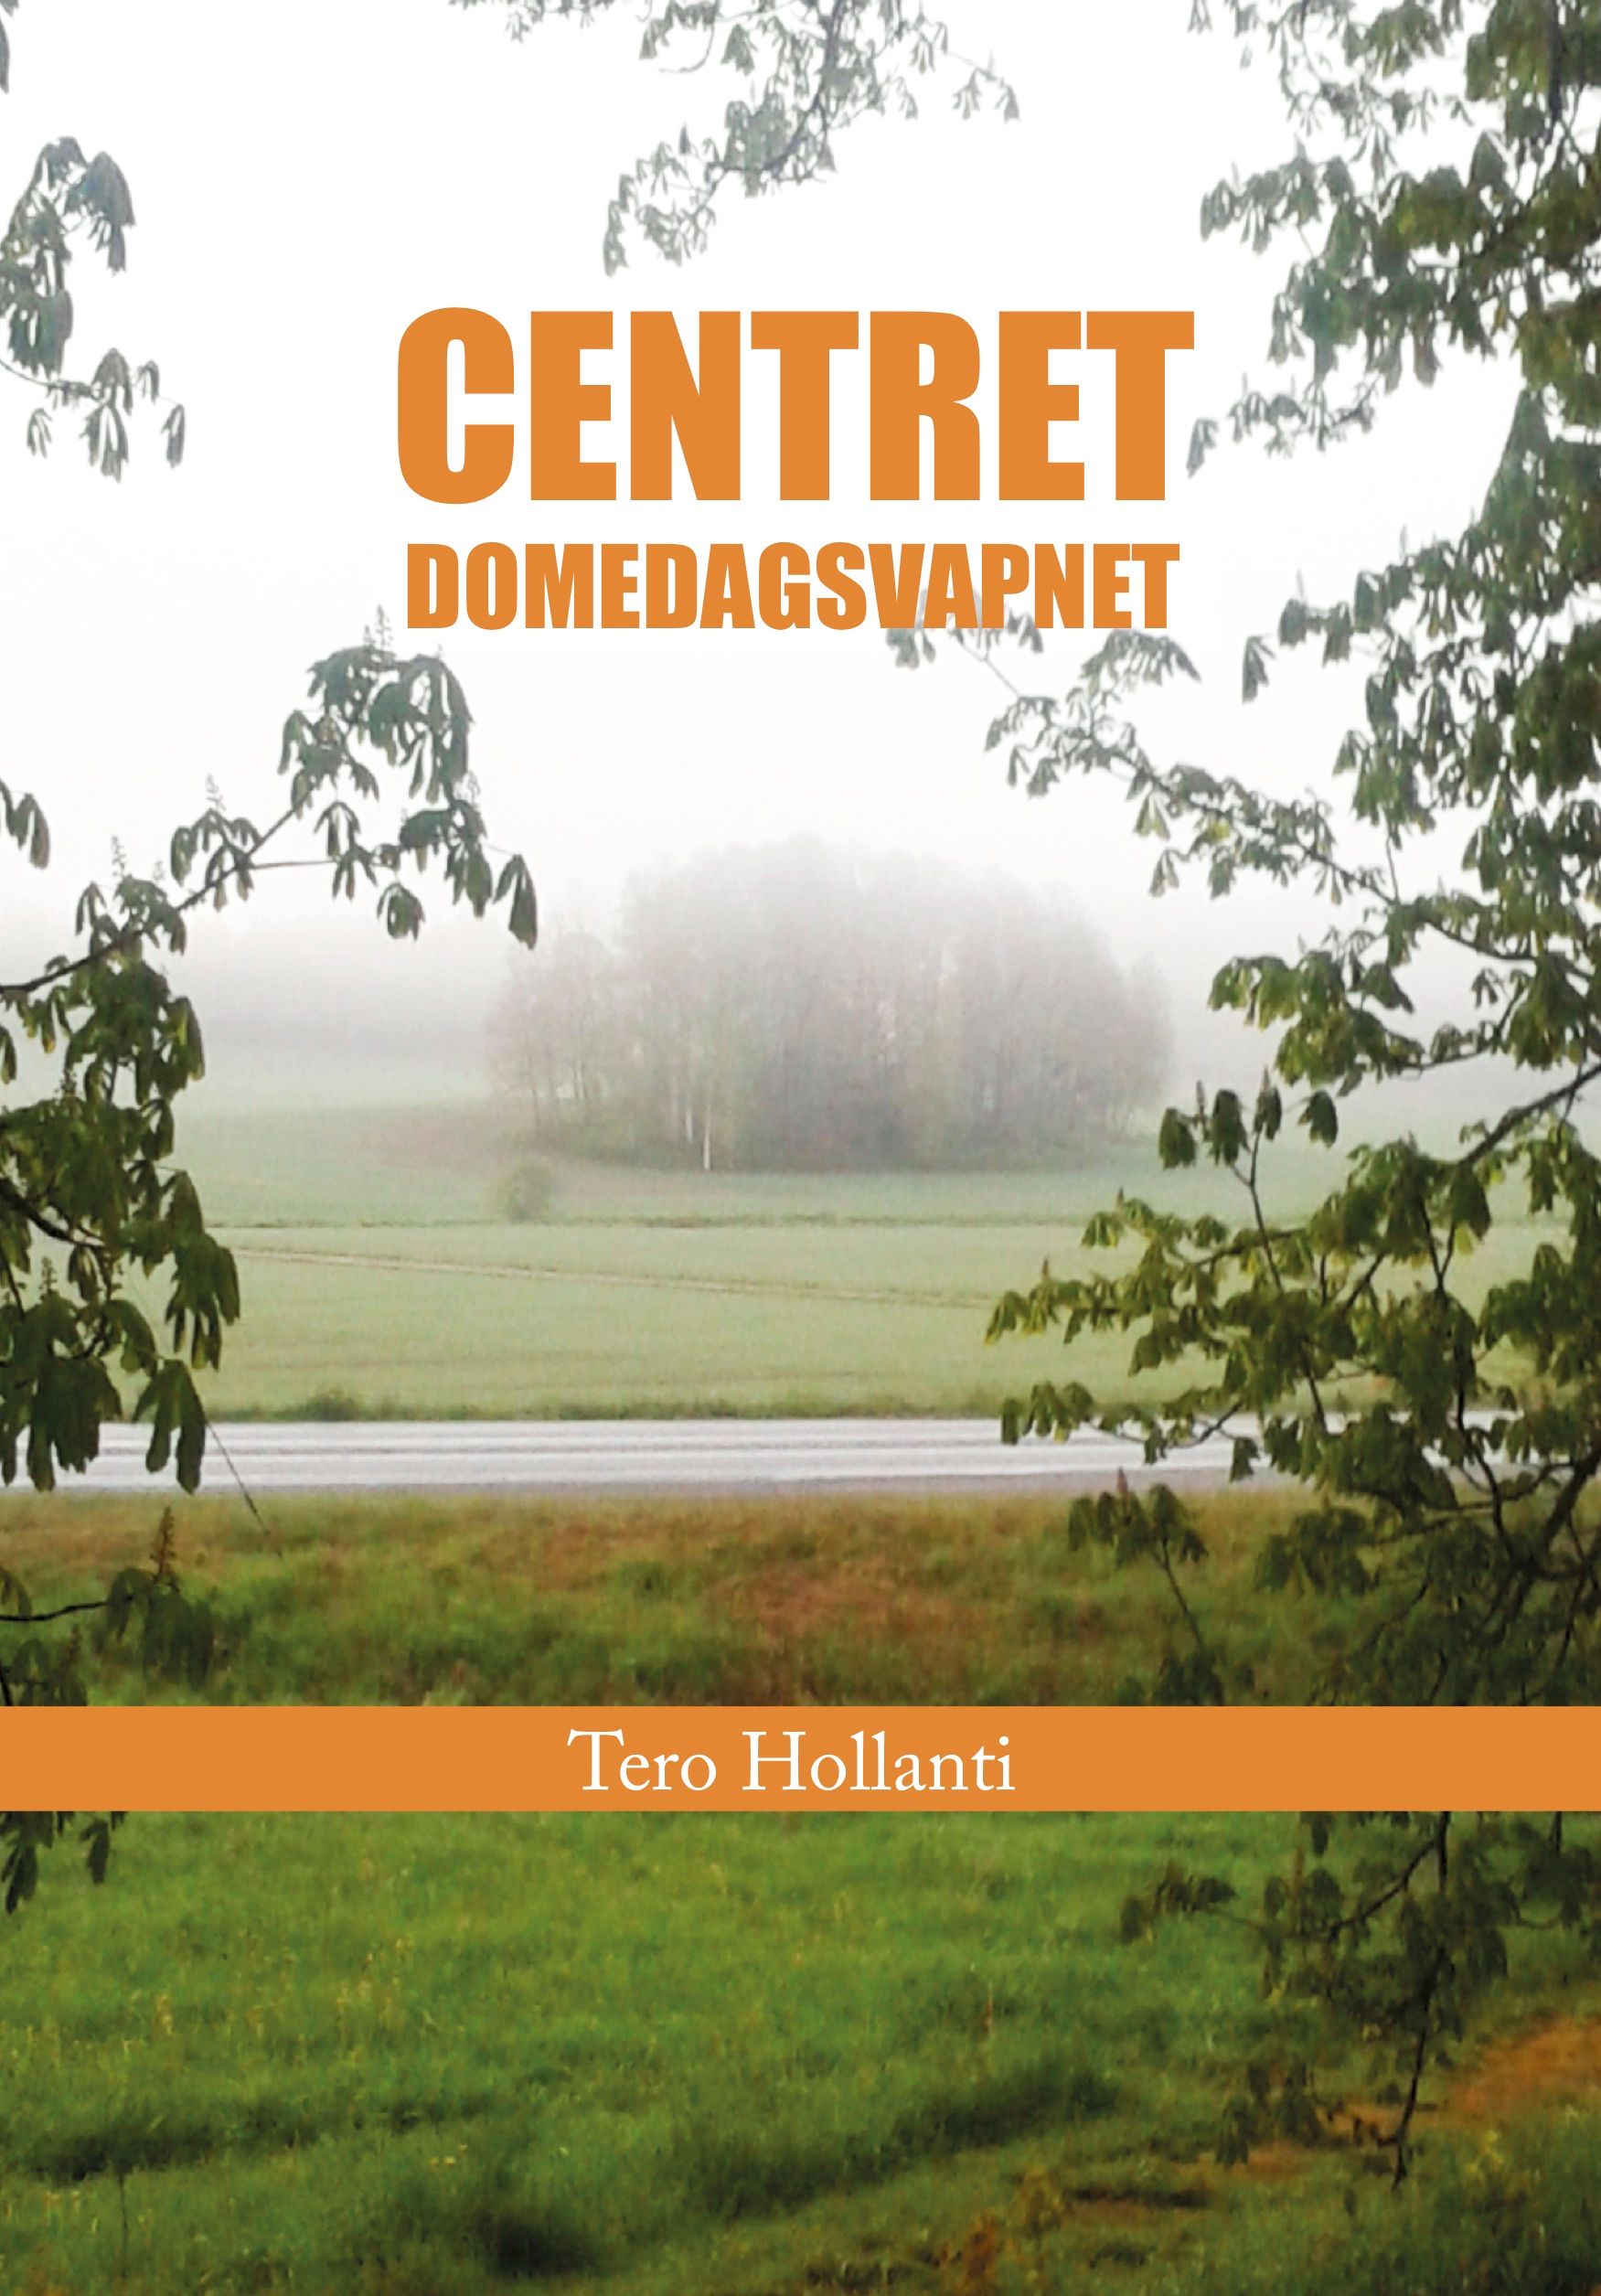 Centret Domedagsvapnet, eBook by Tero Hollanti